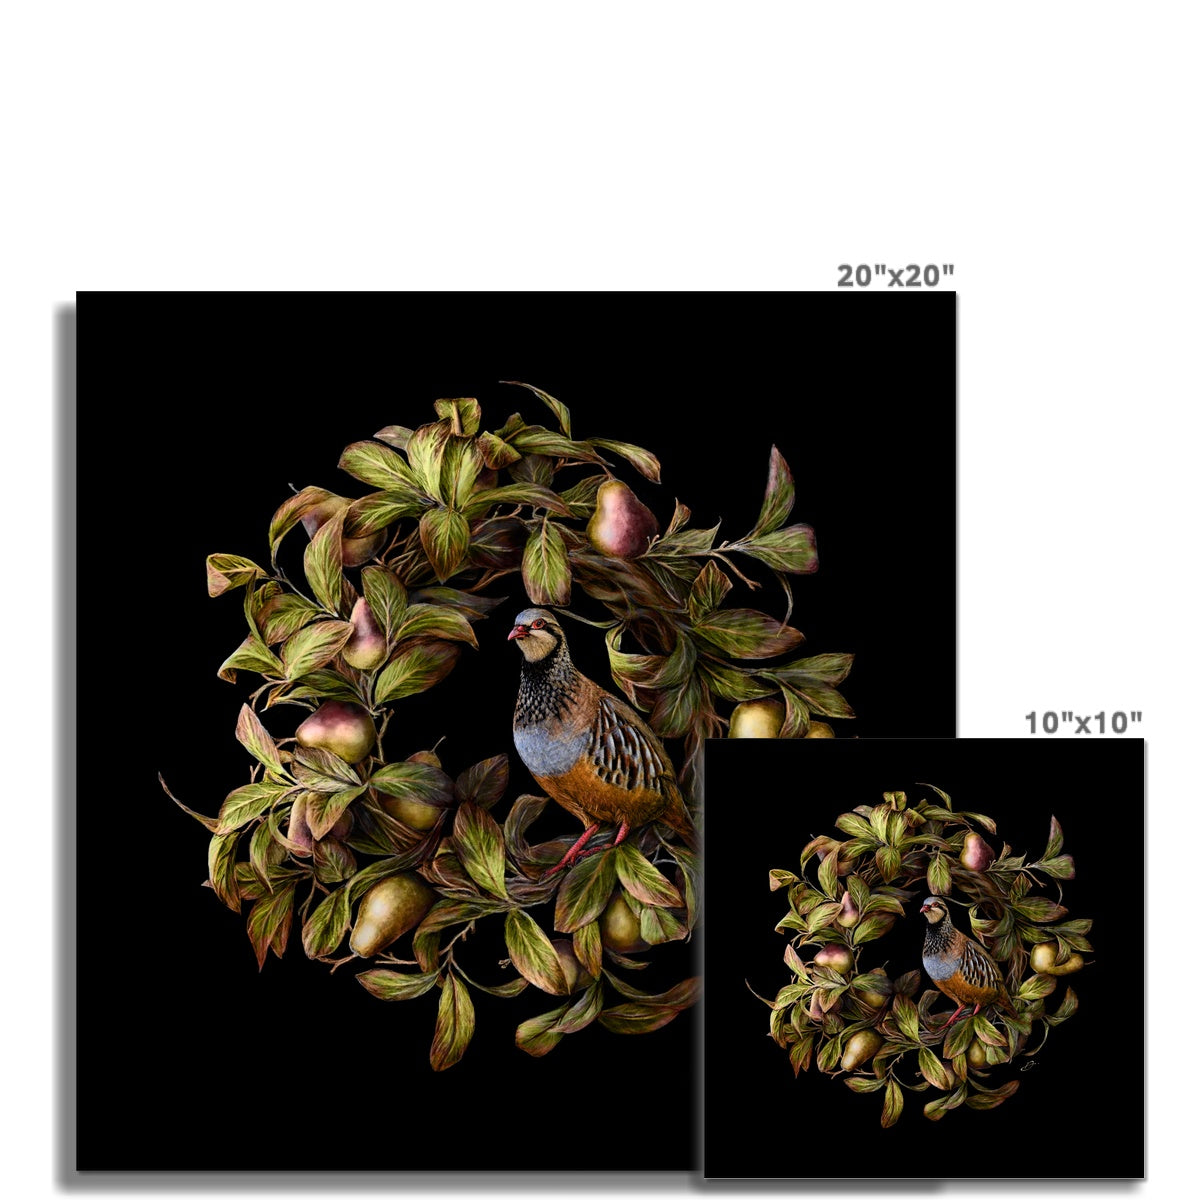 Flora & Fauna - A Partridge in a Pear Tree